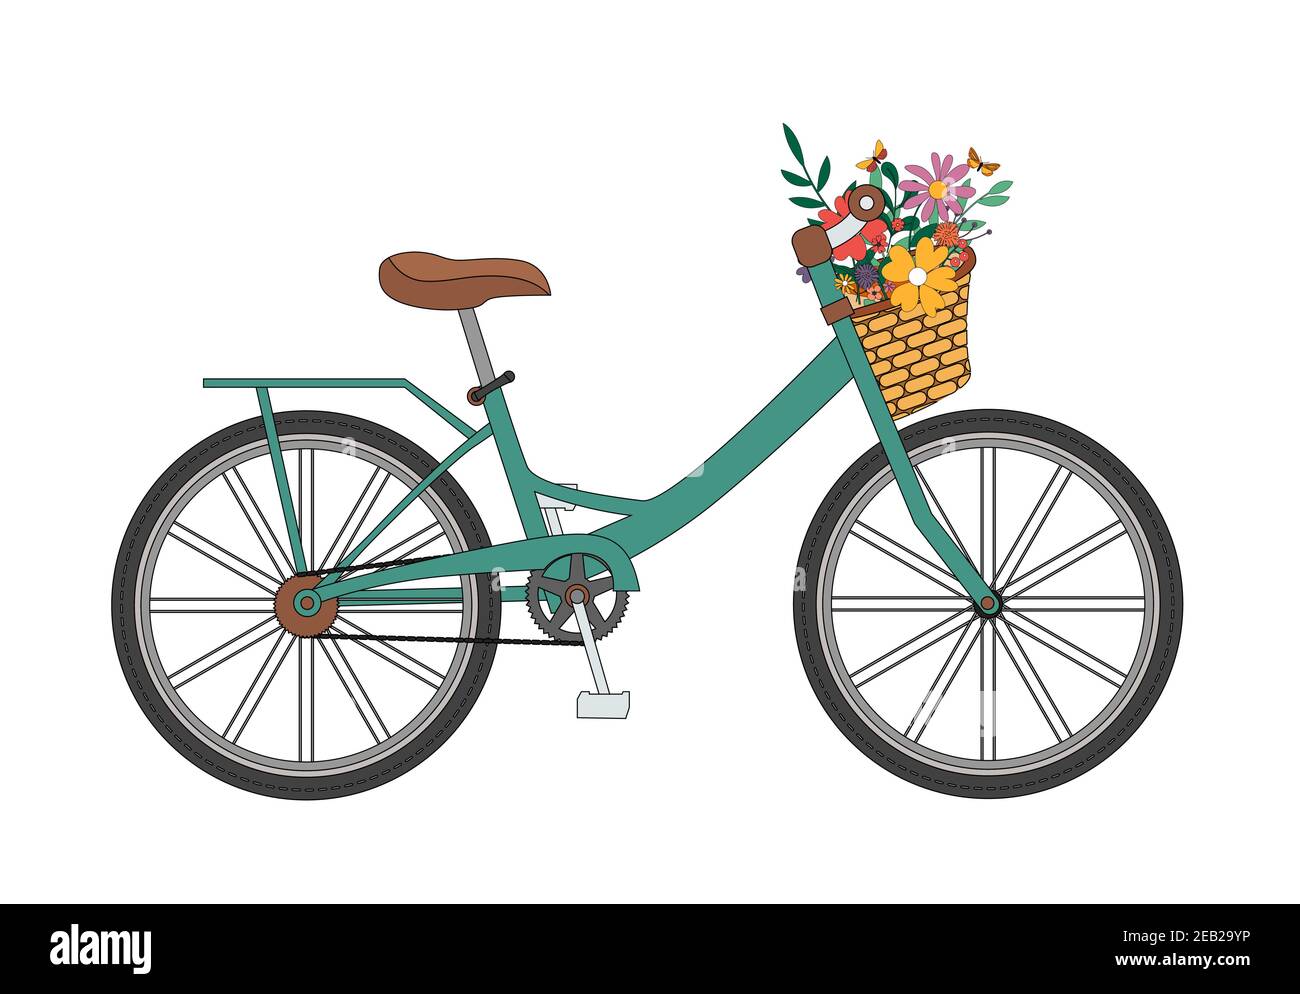 Fahrrad mit einem Blumenstrauß aus Frühlingsblumen. Vektorgrafik. EPS10 Stock Vektor